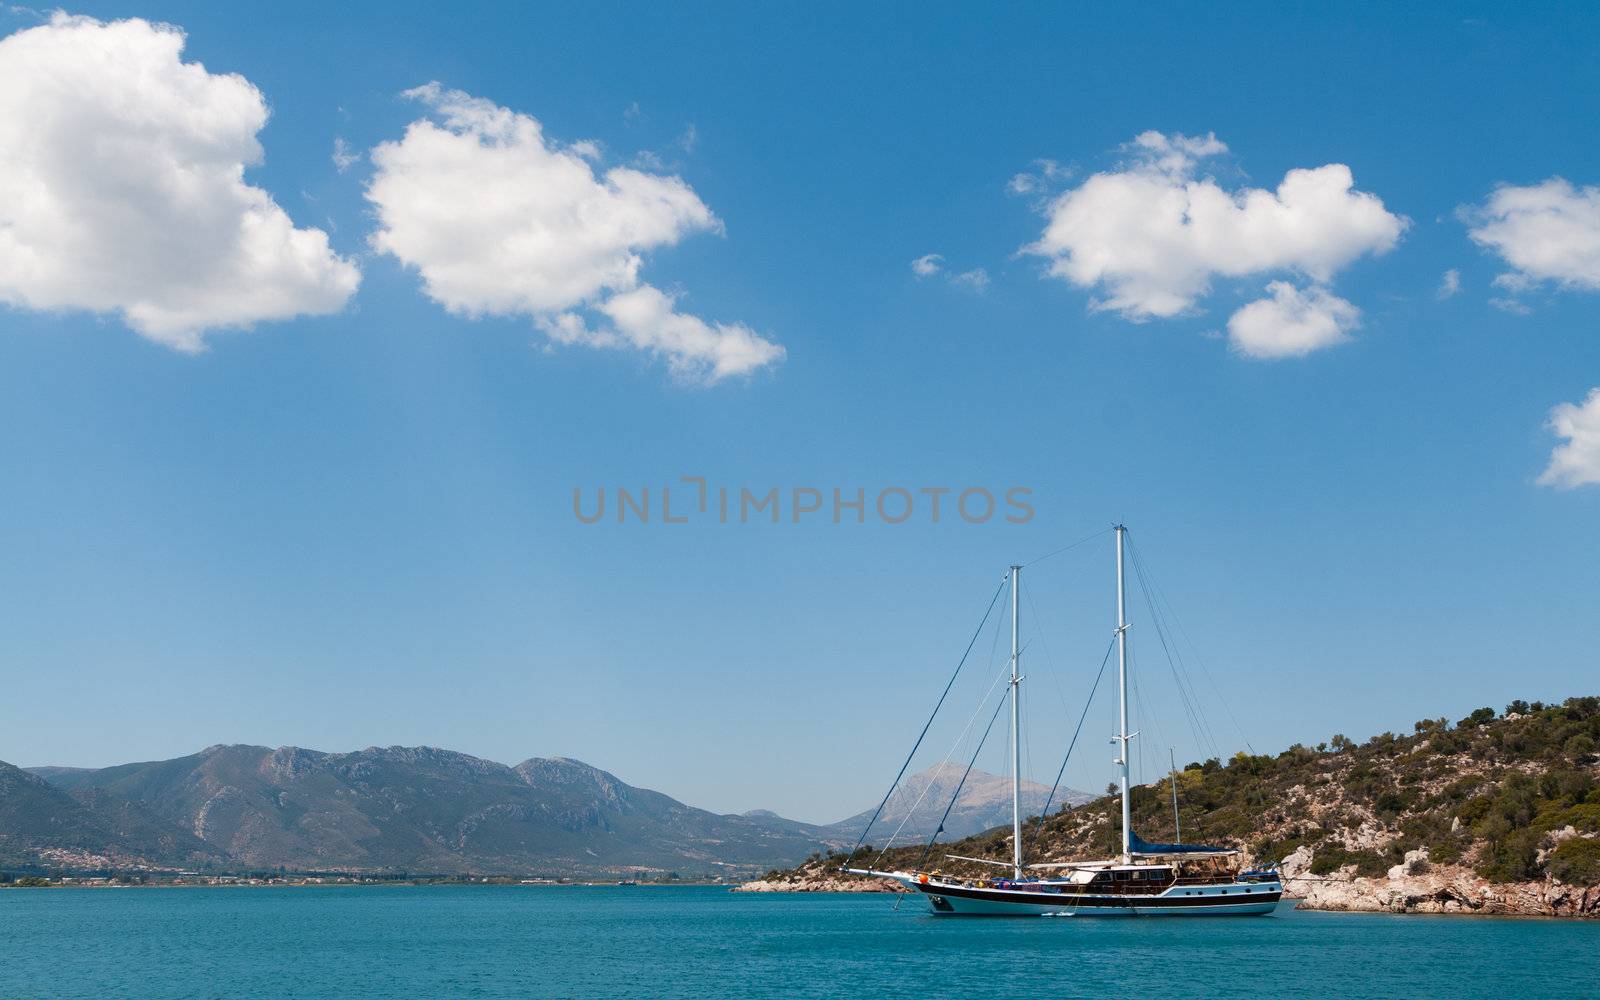 Yacht sailing at Aegean sea near the island of Poros, Greece